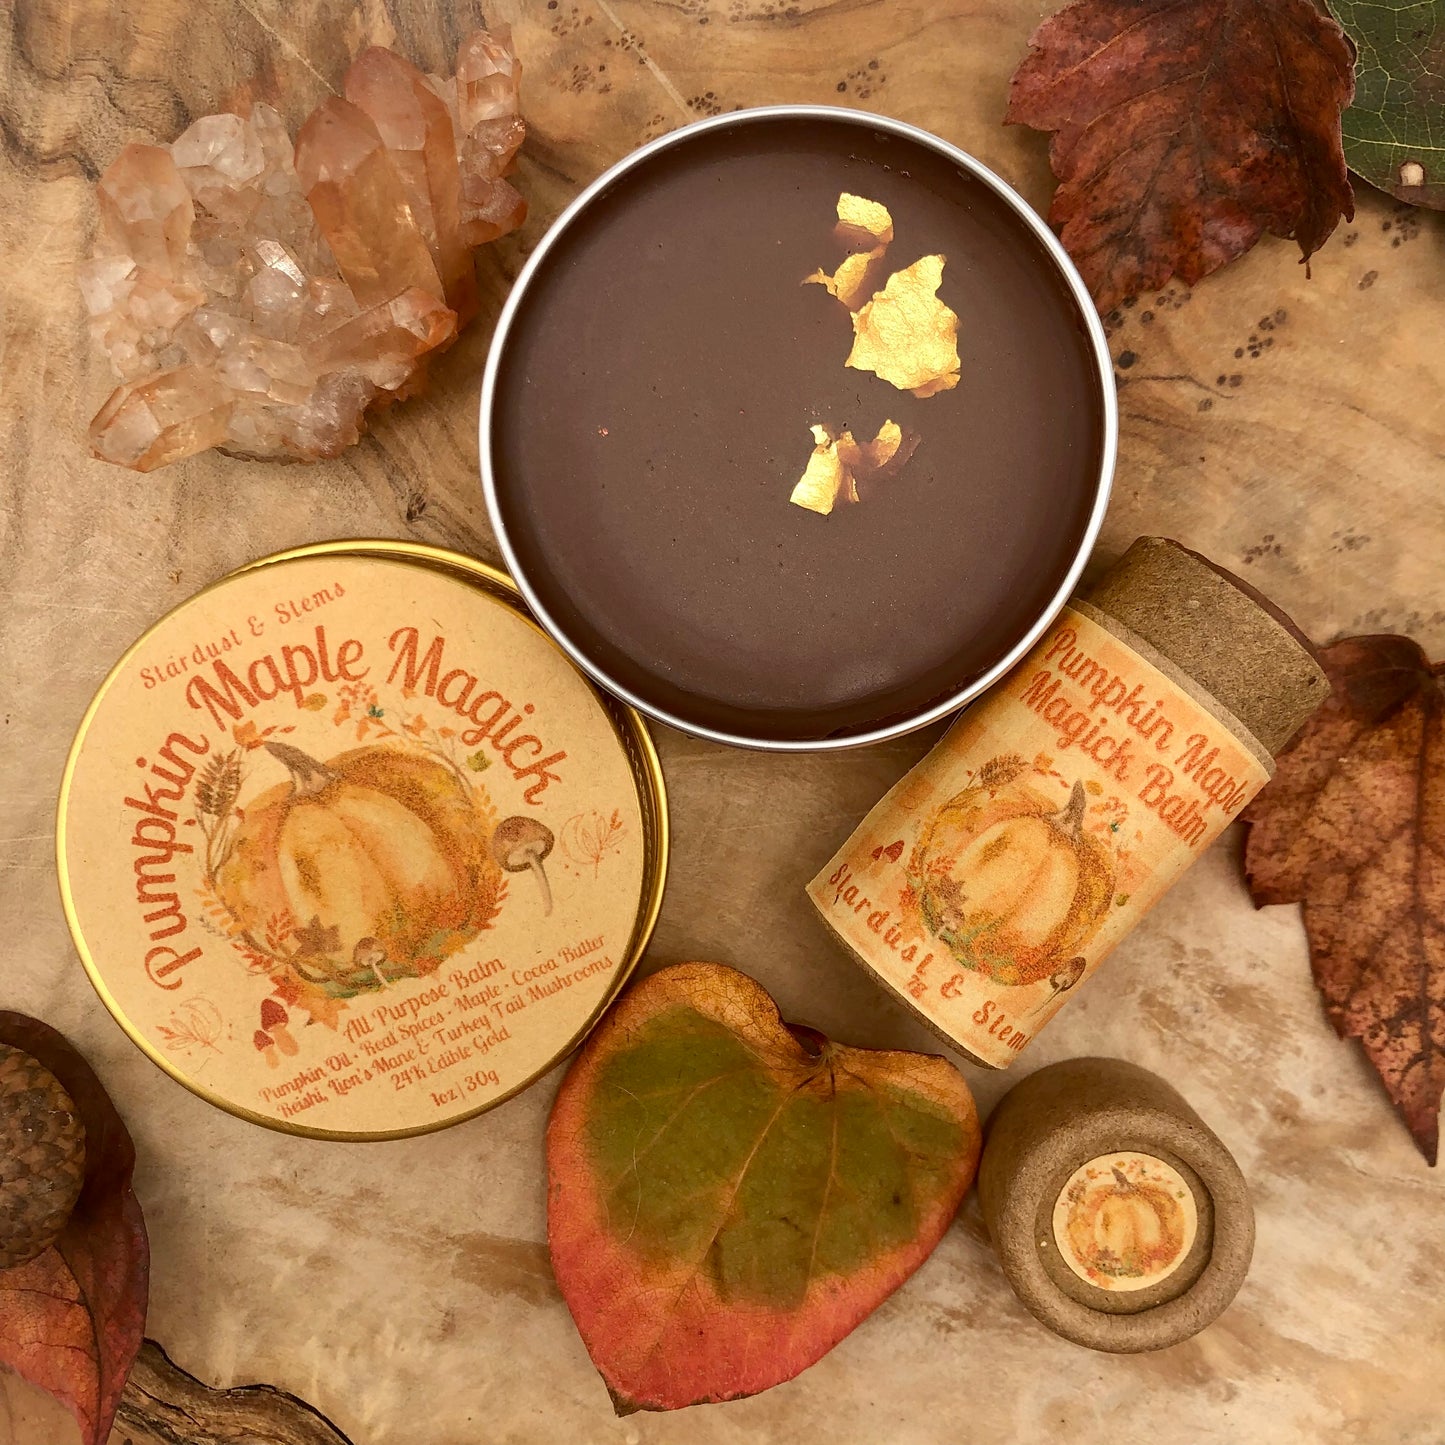 Handmade Pumpkin Spice and Maple Magick: Cozy Fall Lip Balm with Pumpkin Oil, Cinnamon, Clove, Nutmeg, Ginger and Real 24K Gold